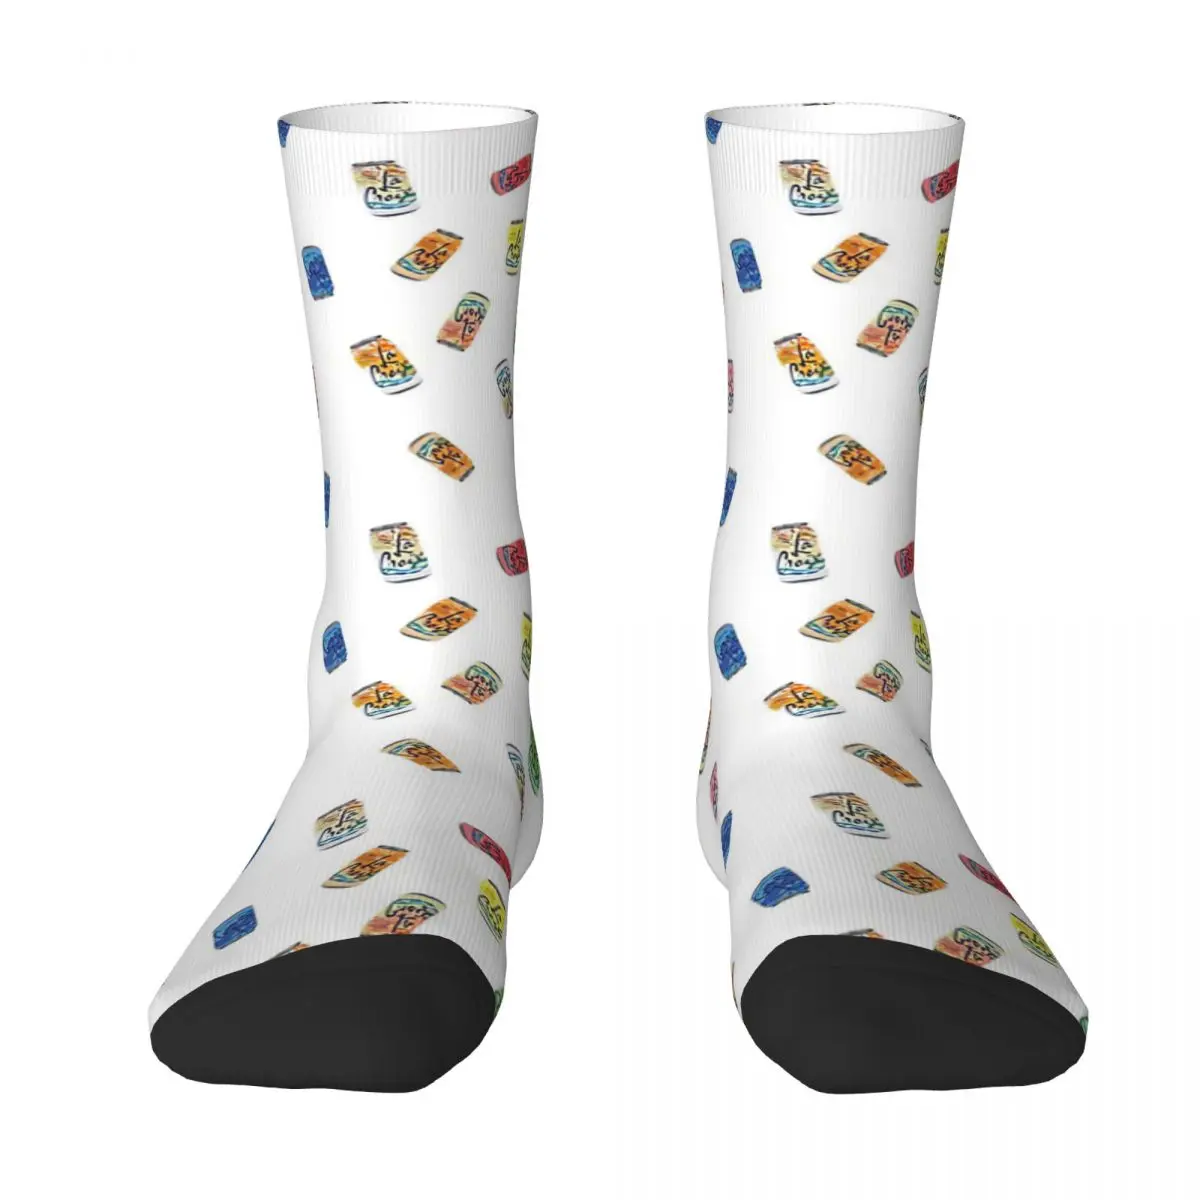 La Criox Pattern Adult Socks Unisex socks,men Socks women Socks